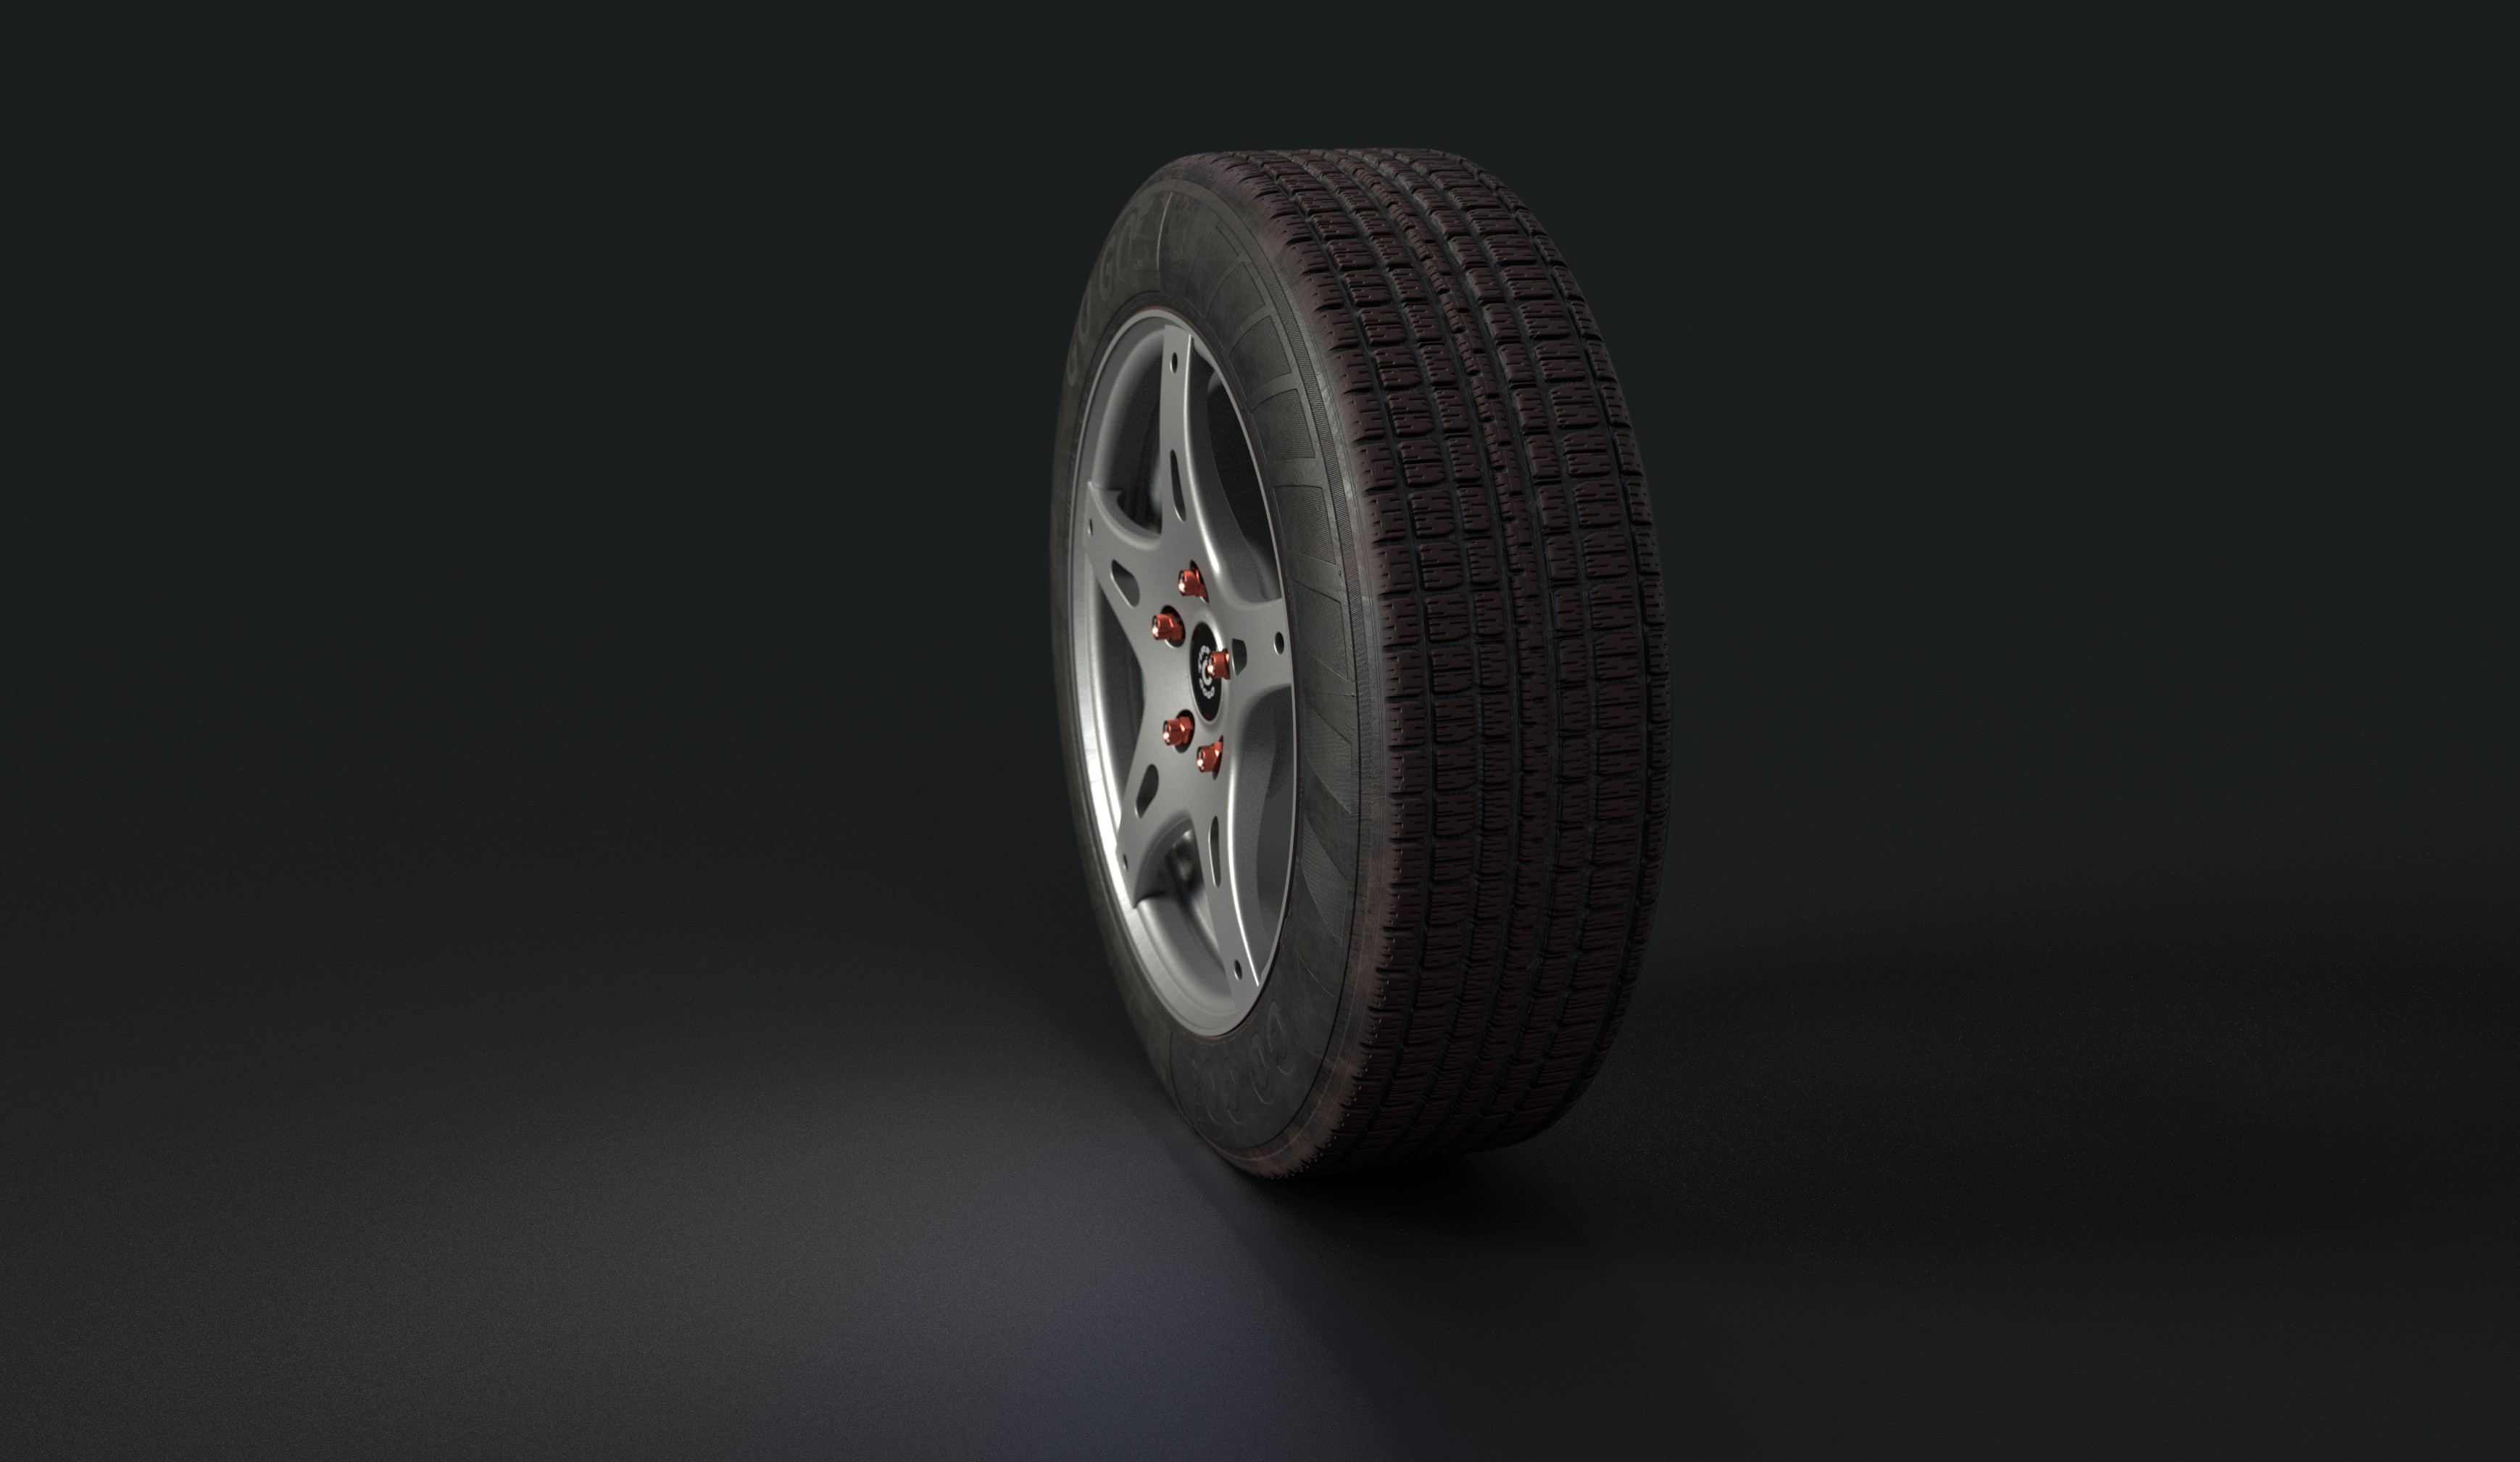 GOGO render image showing tire tesselletion.